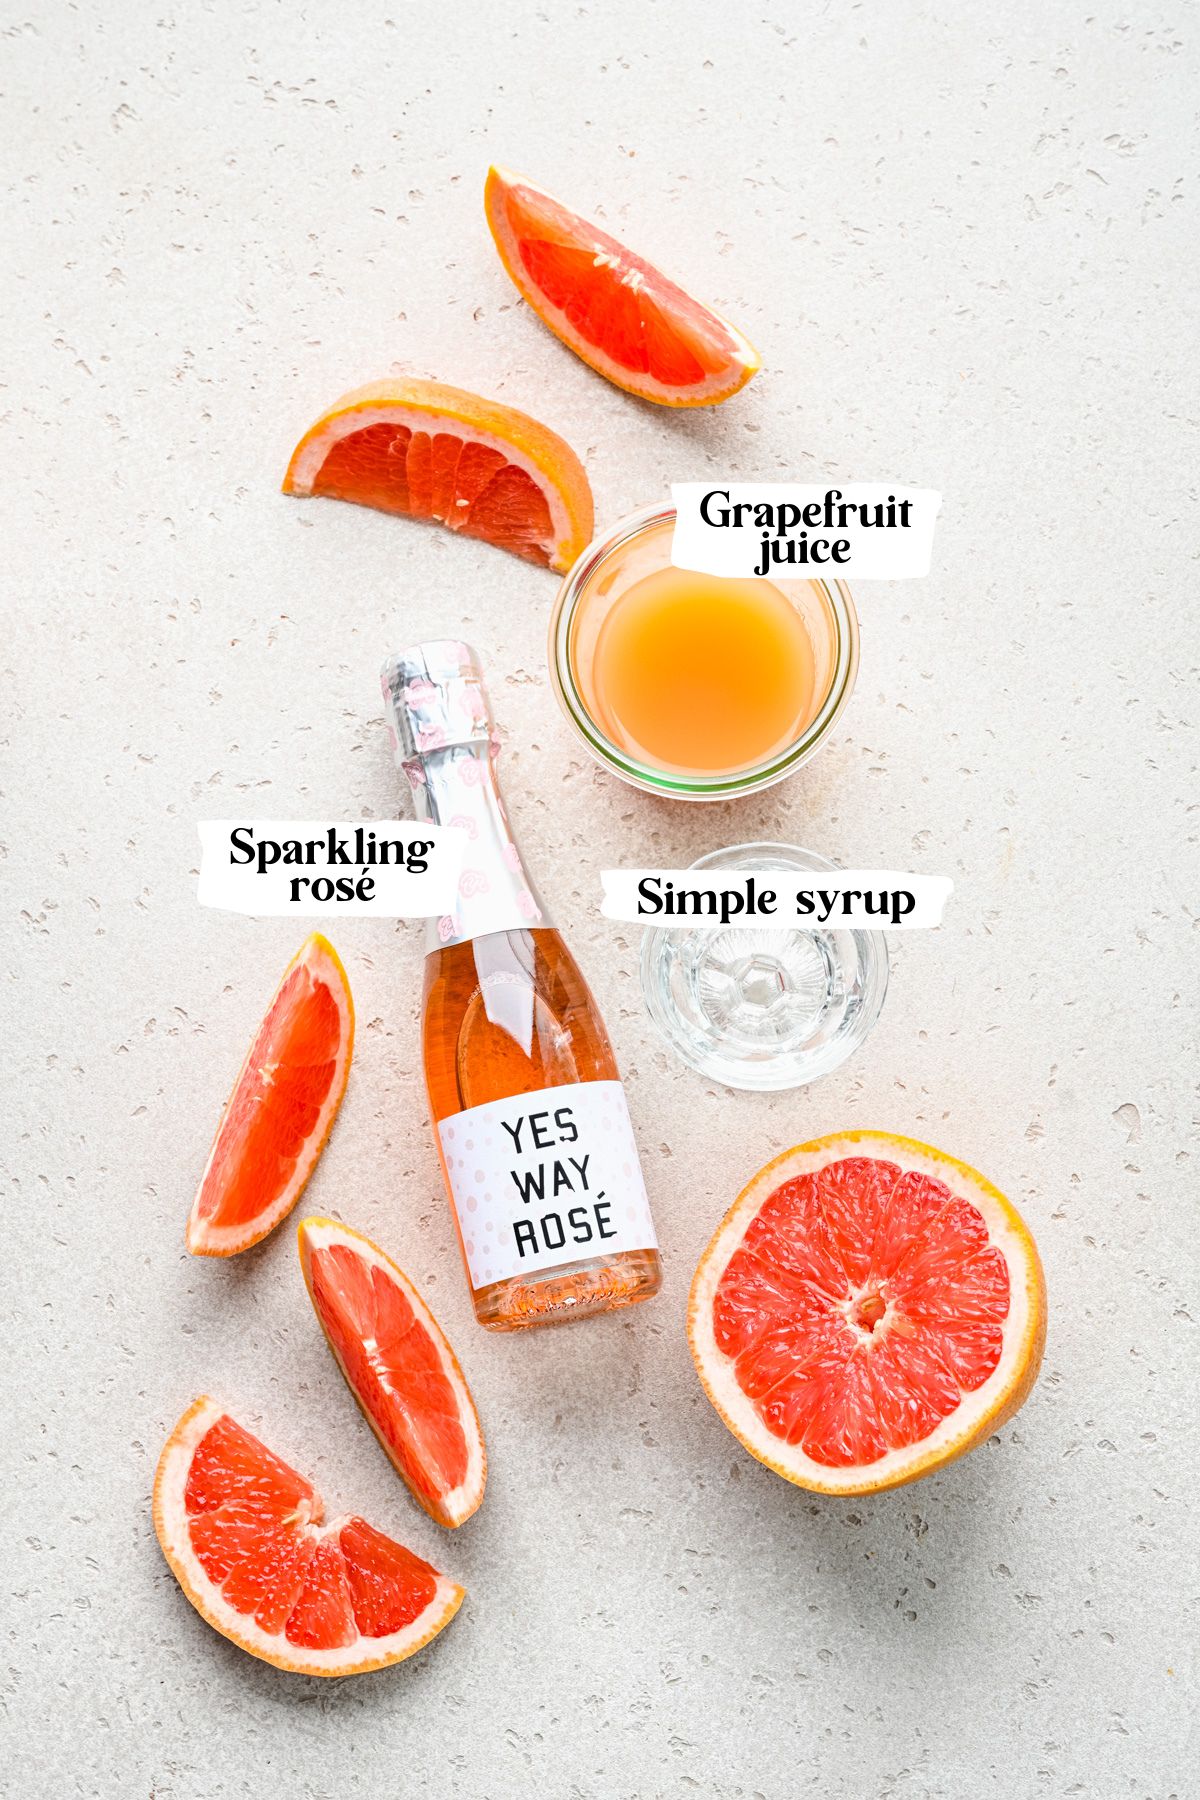 Grapefruit mimosa ingredients including rosé and grapefruit juice.